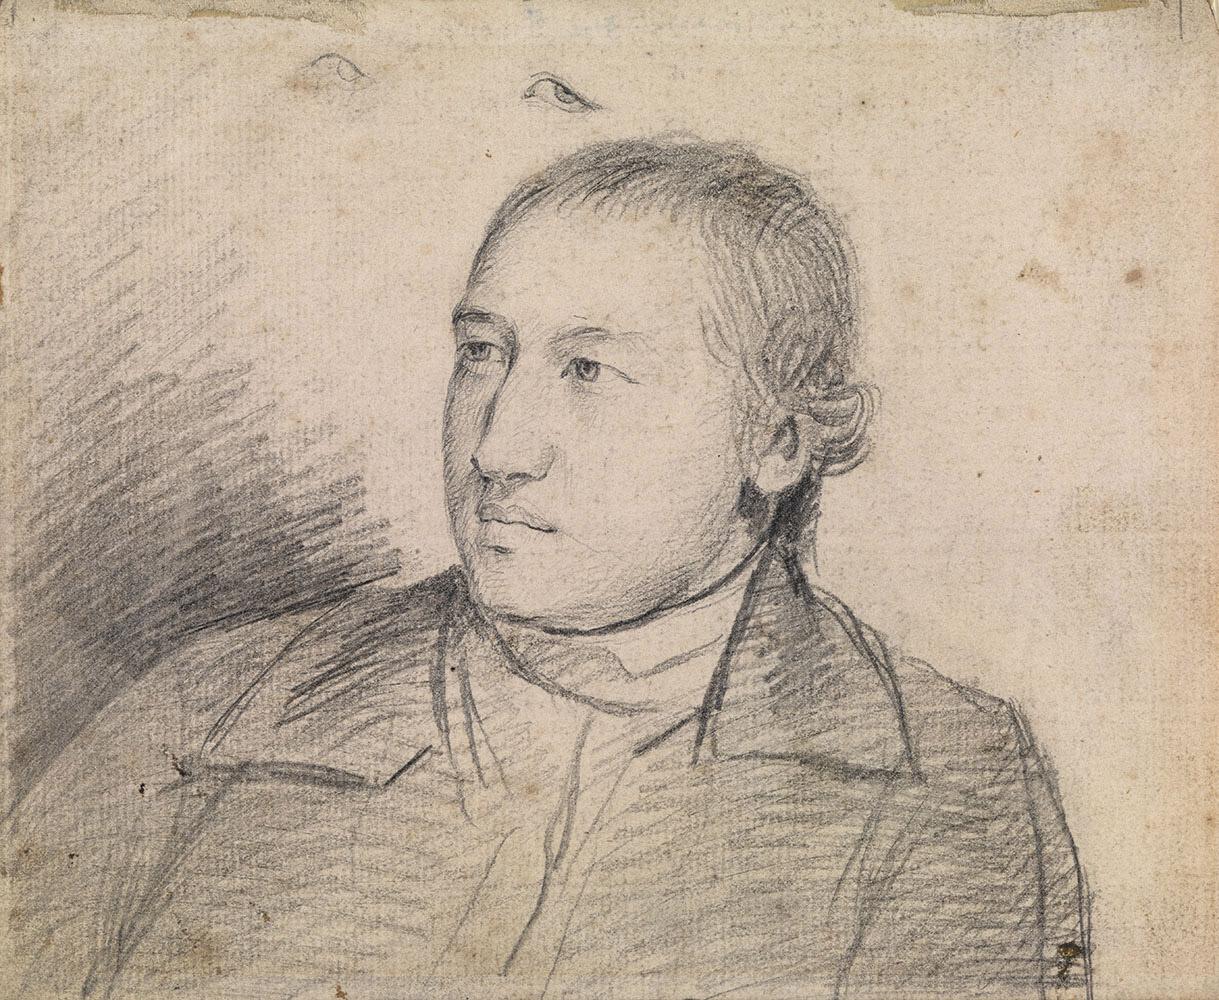 George Romney Portrait - 18th century portrait drawing of the Rev. William Atkinson